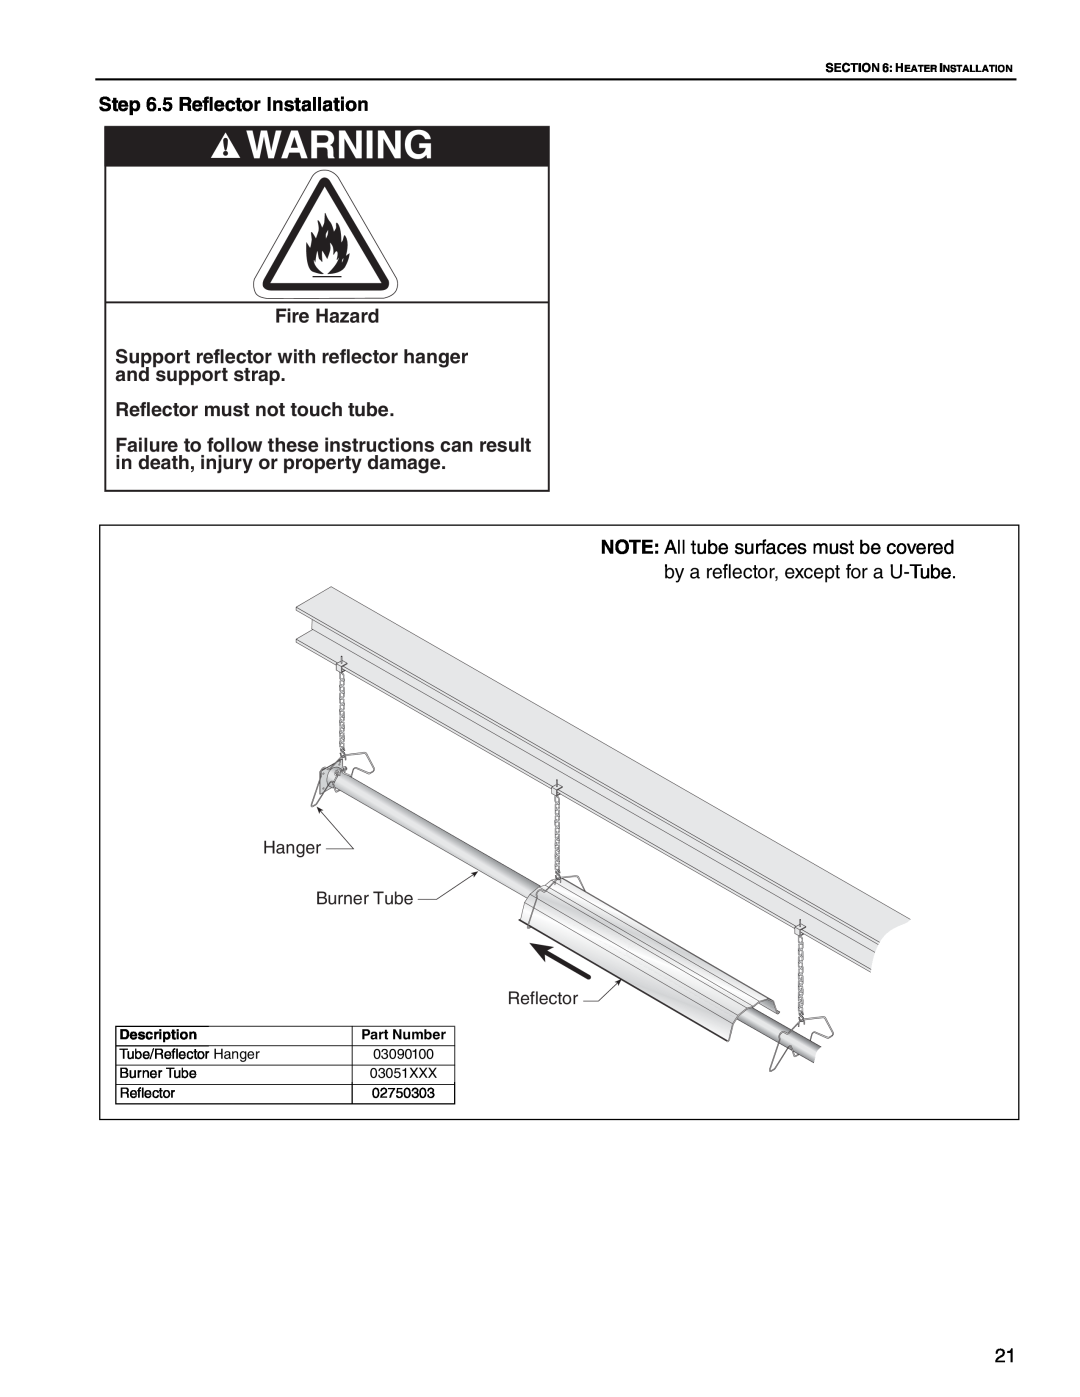 Roberts Gorden CTH2-150 5 Reflector Installation, Fire Hazard, Reflector must not touch tube, Description, Part Number 